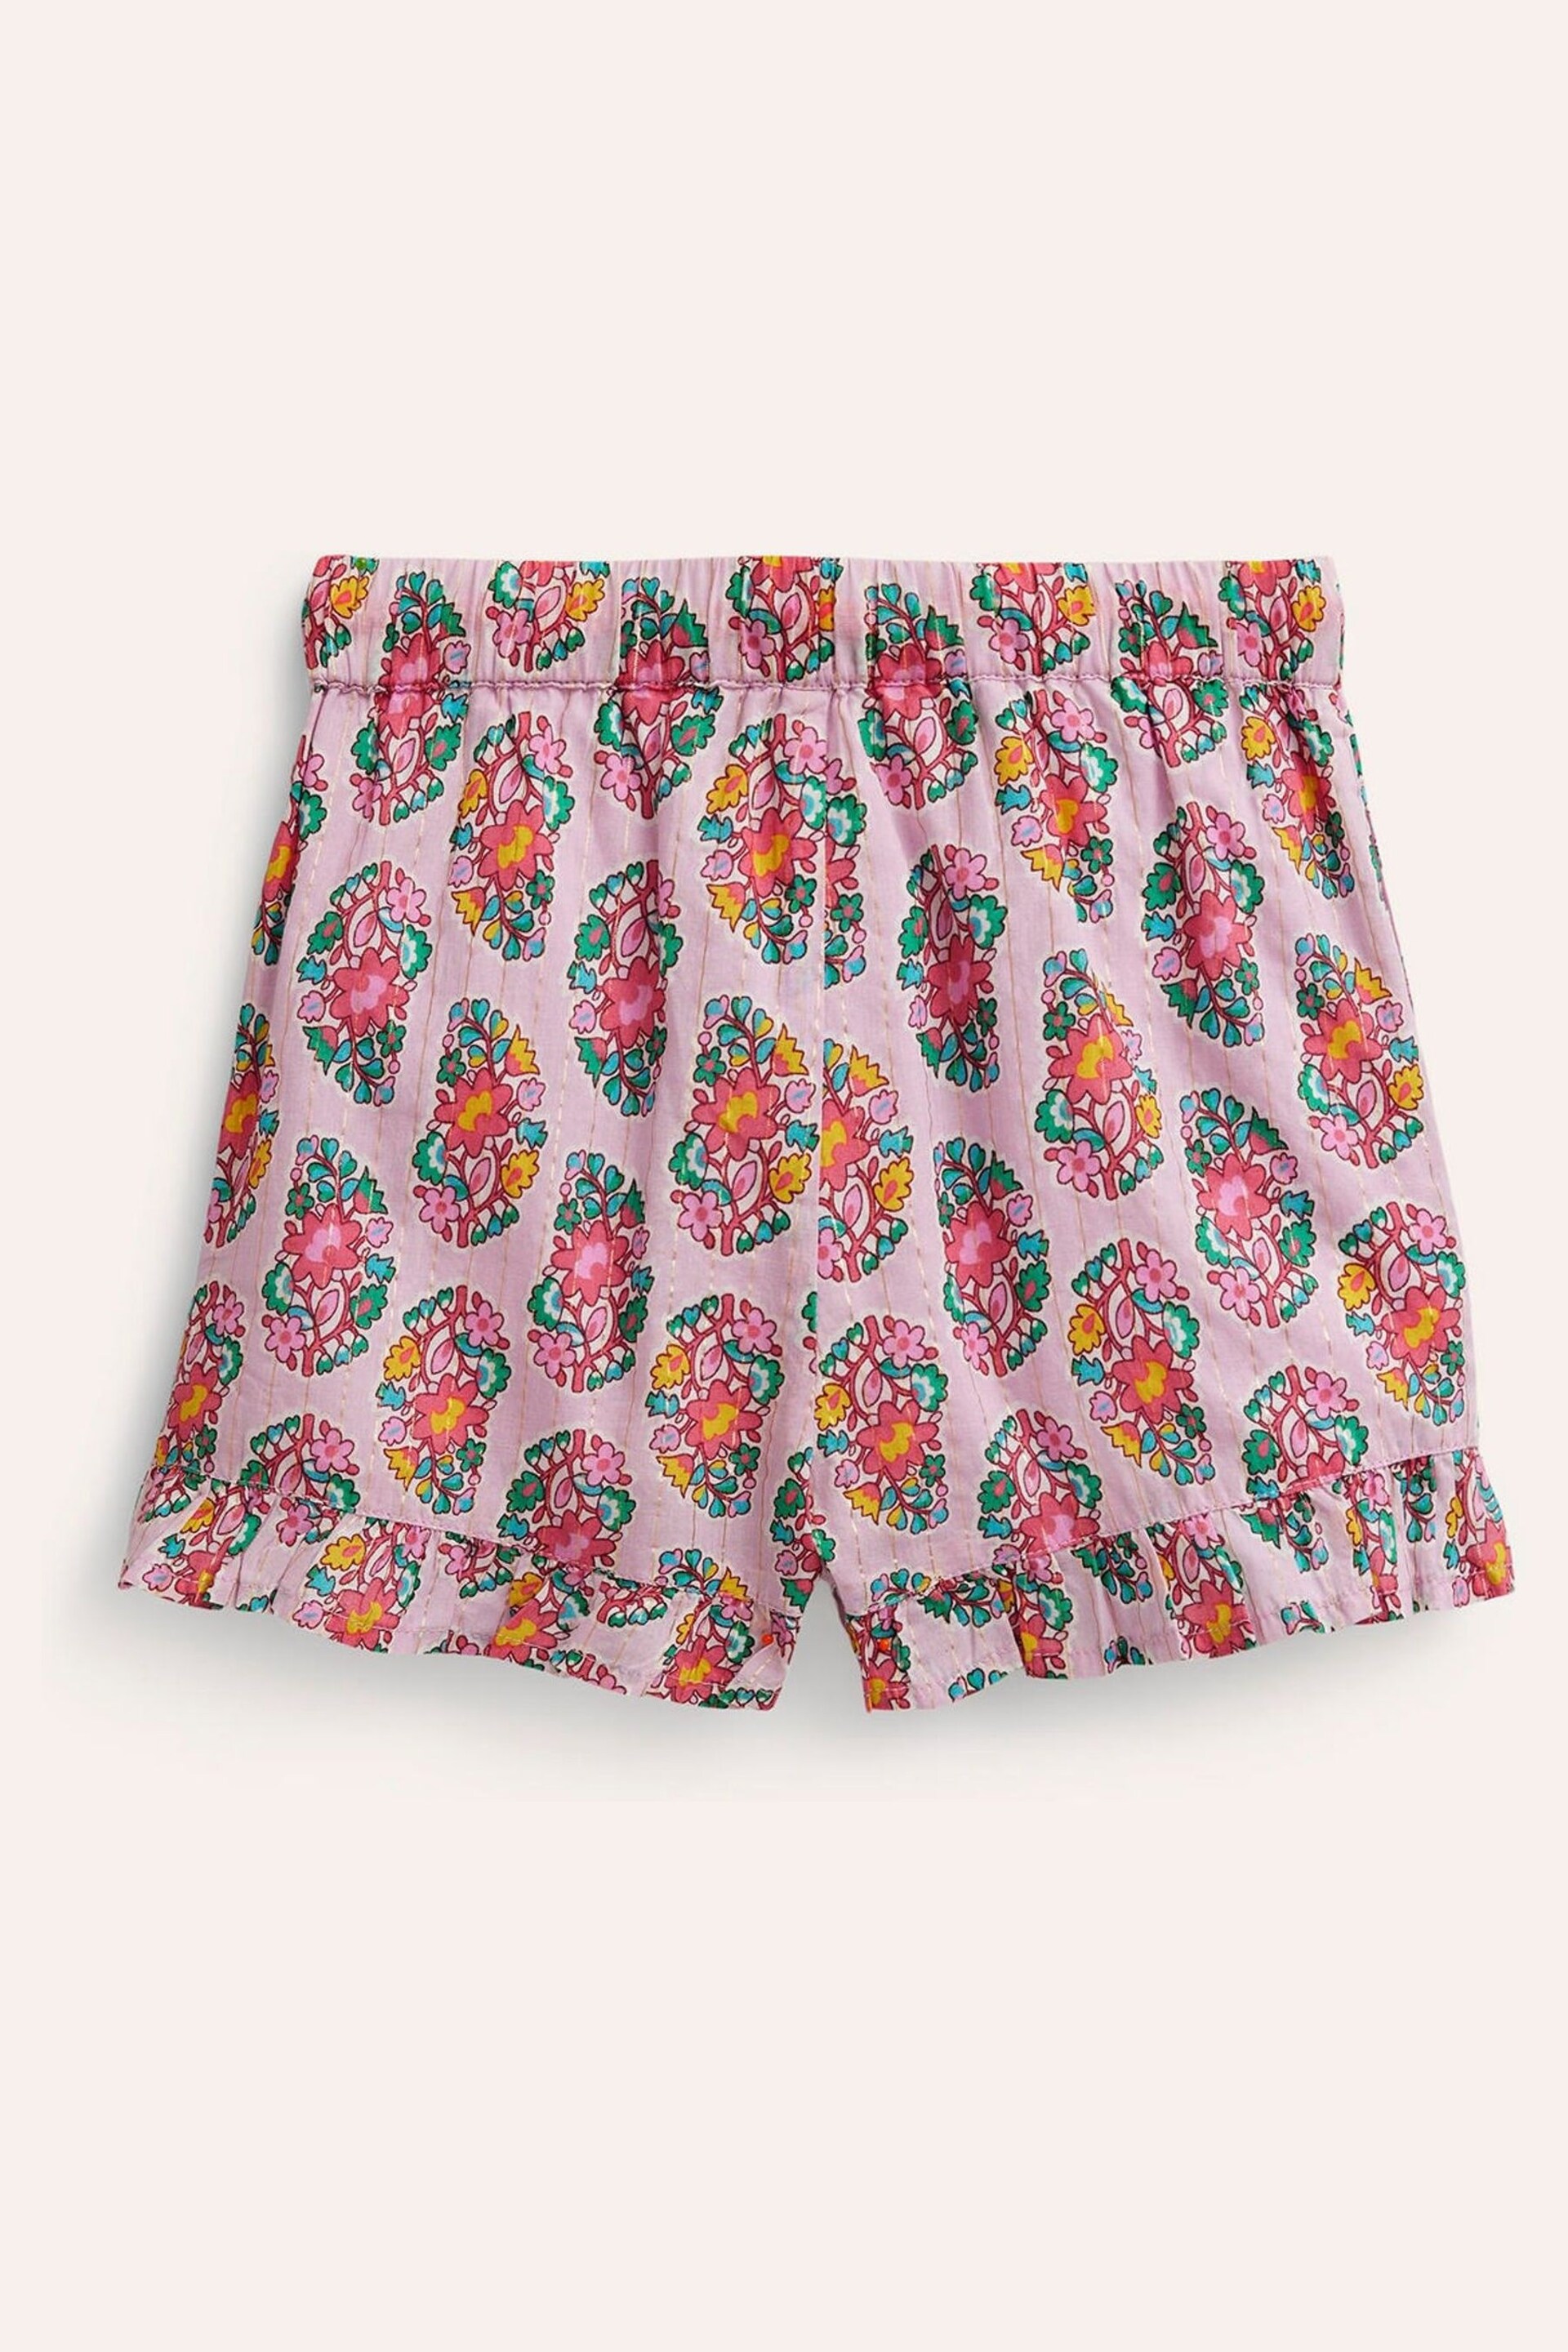 Boden Pink Frill Hem Woven Shorts - Image 2 of 3